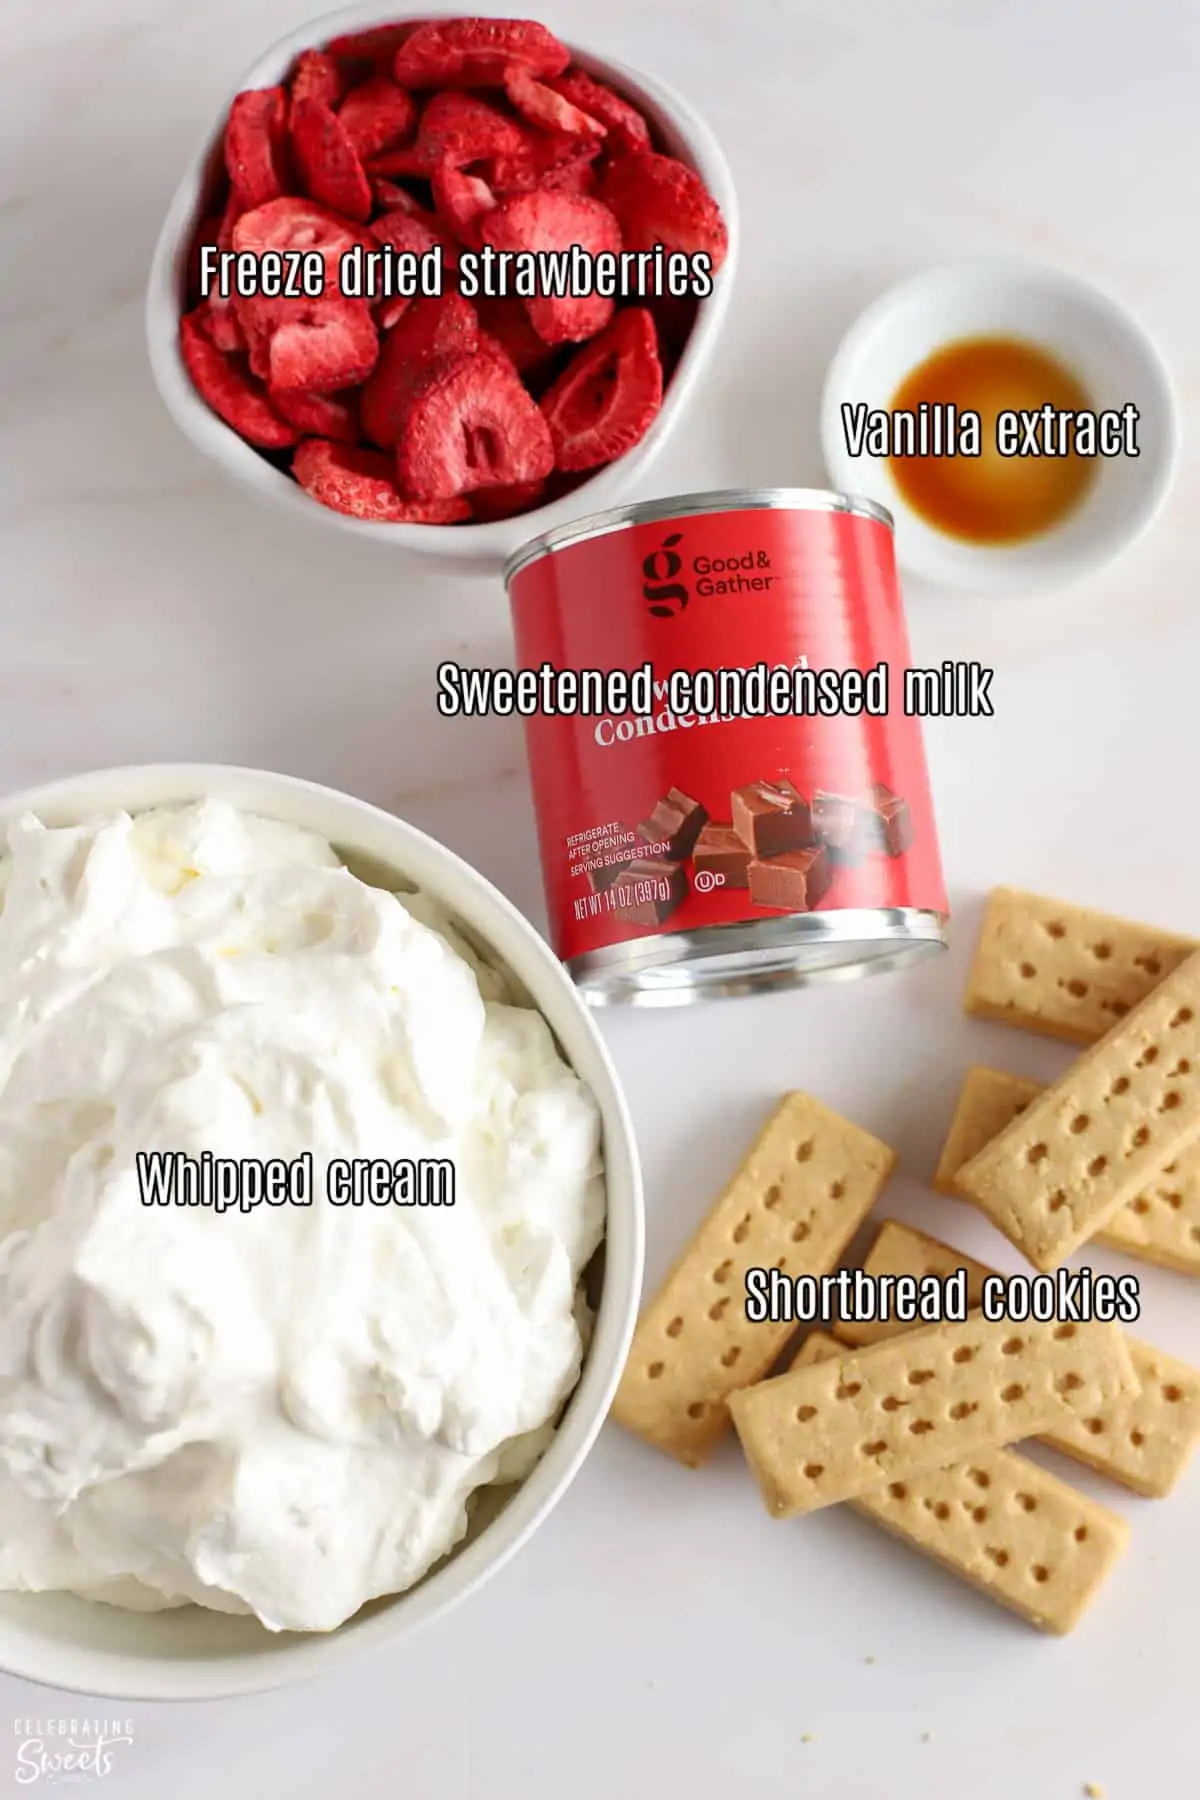 Ingredients for strawberry shortcake ice cream: cream, cookies, strawberries, sweetened condensed milk